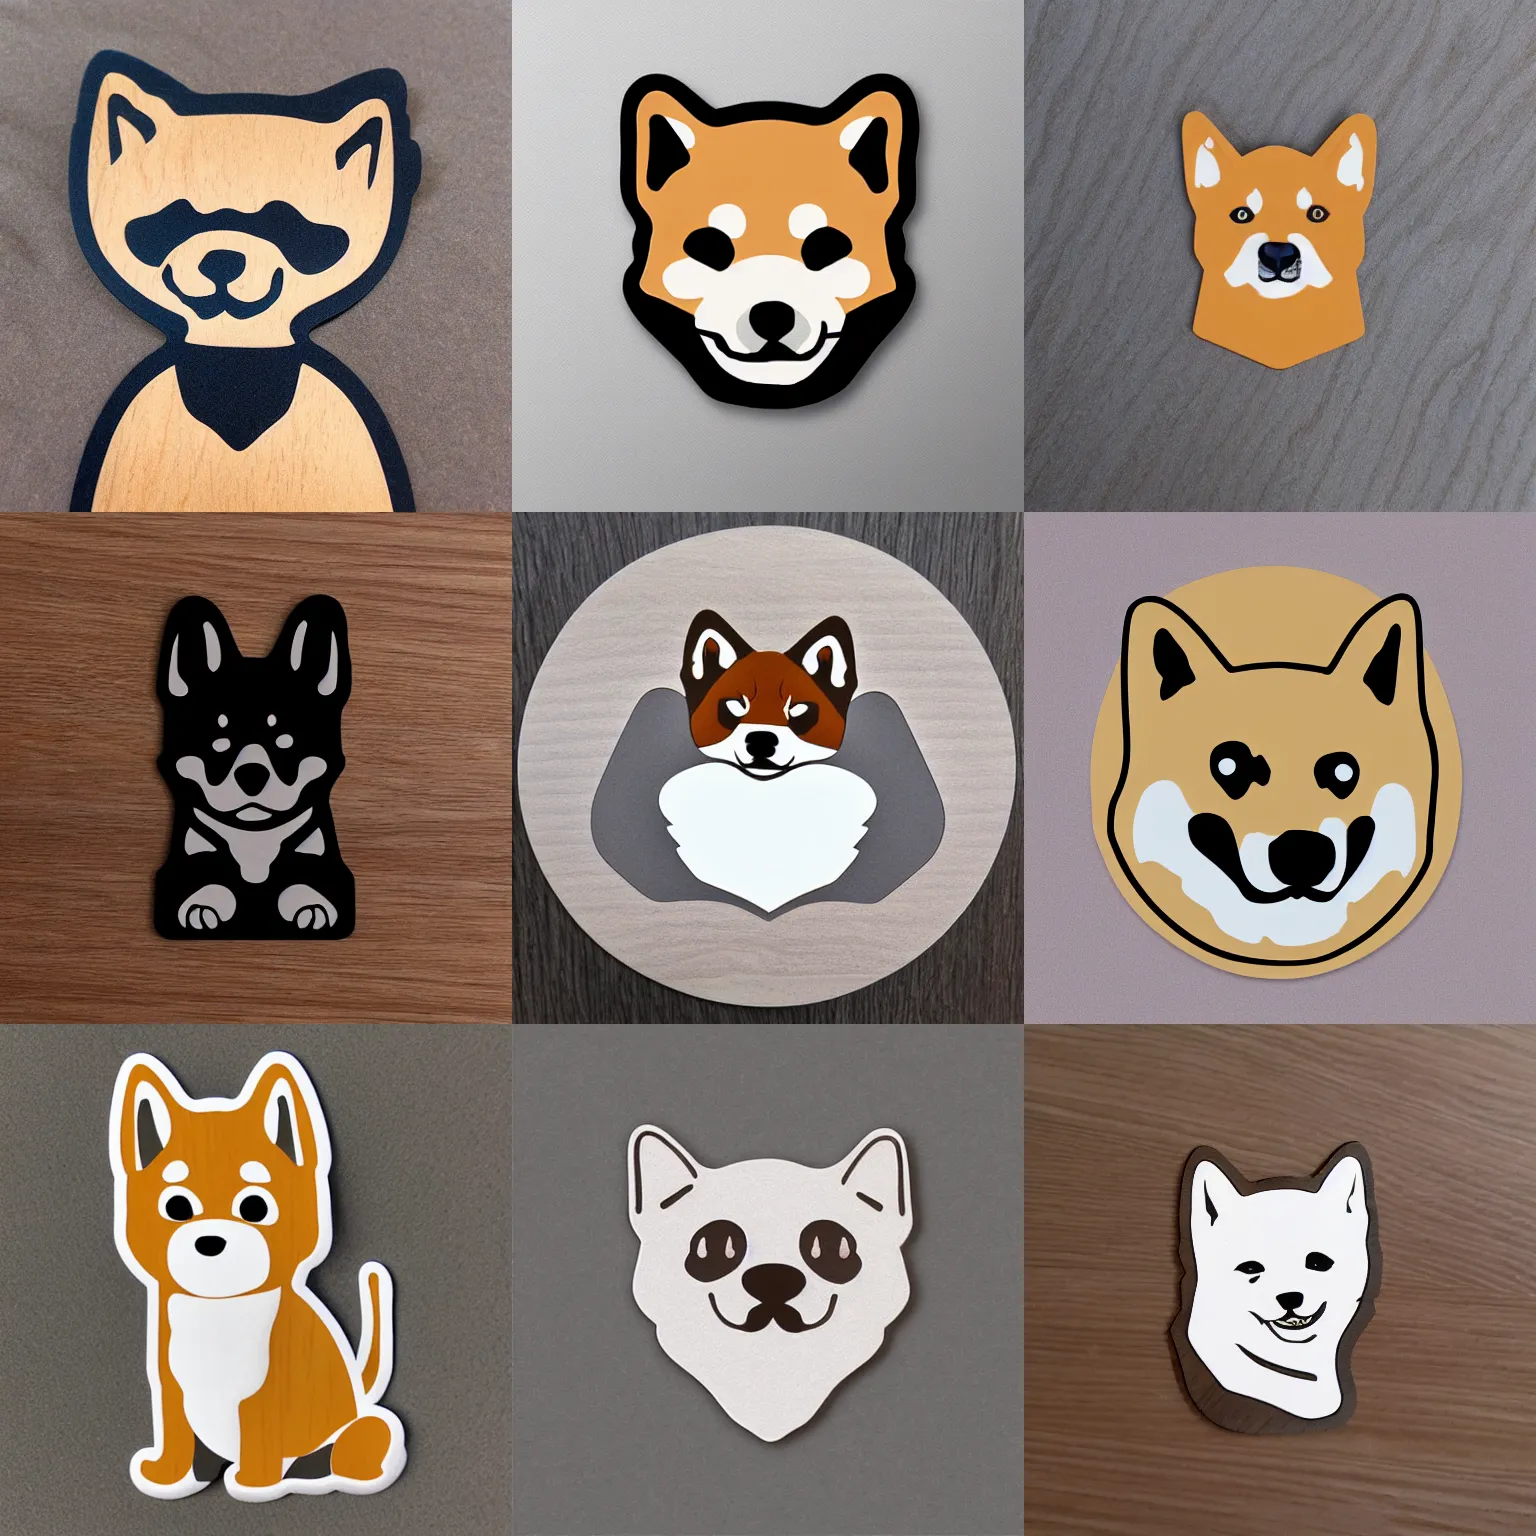 Prompt: cartoon die cut sticker of shiba inu puppy face on lilght gray wood